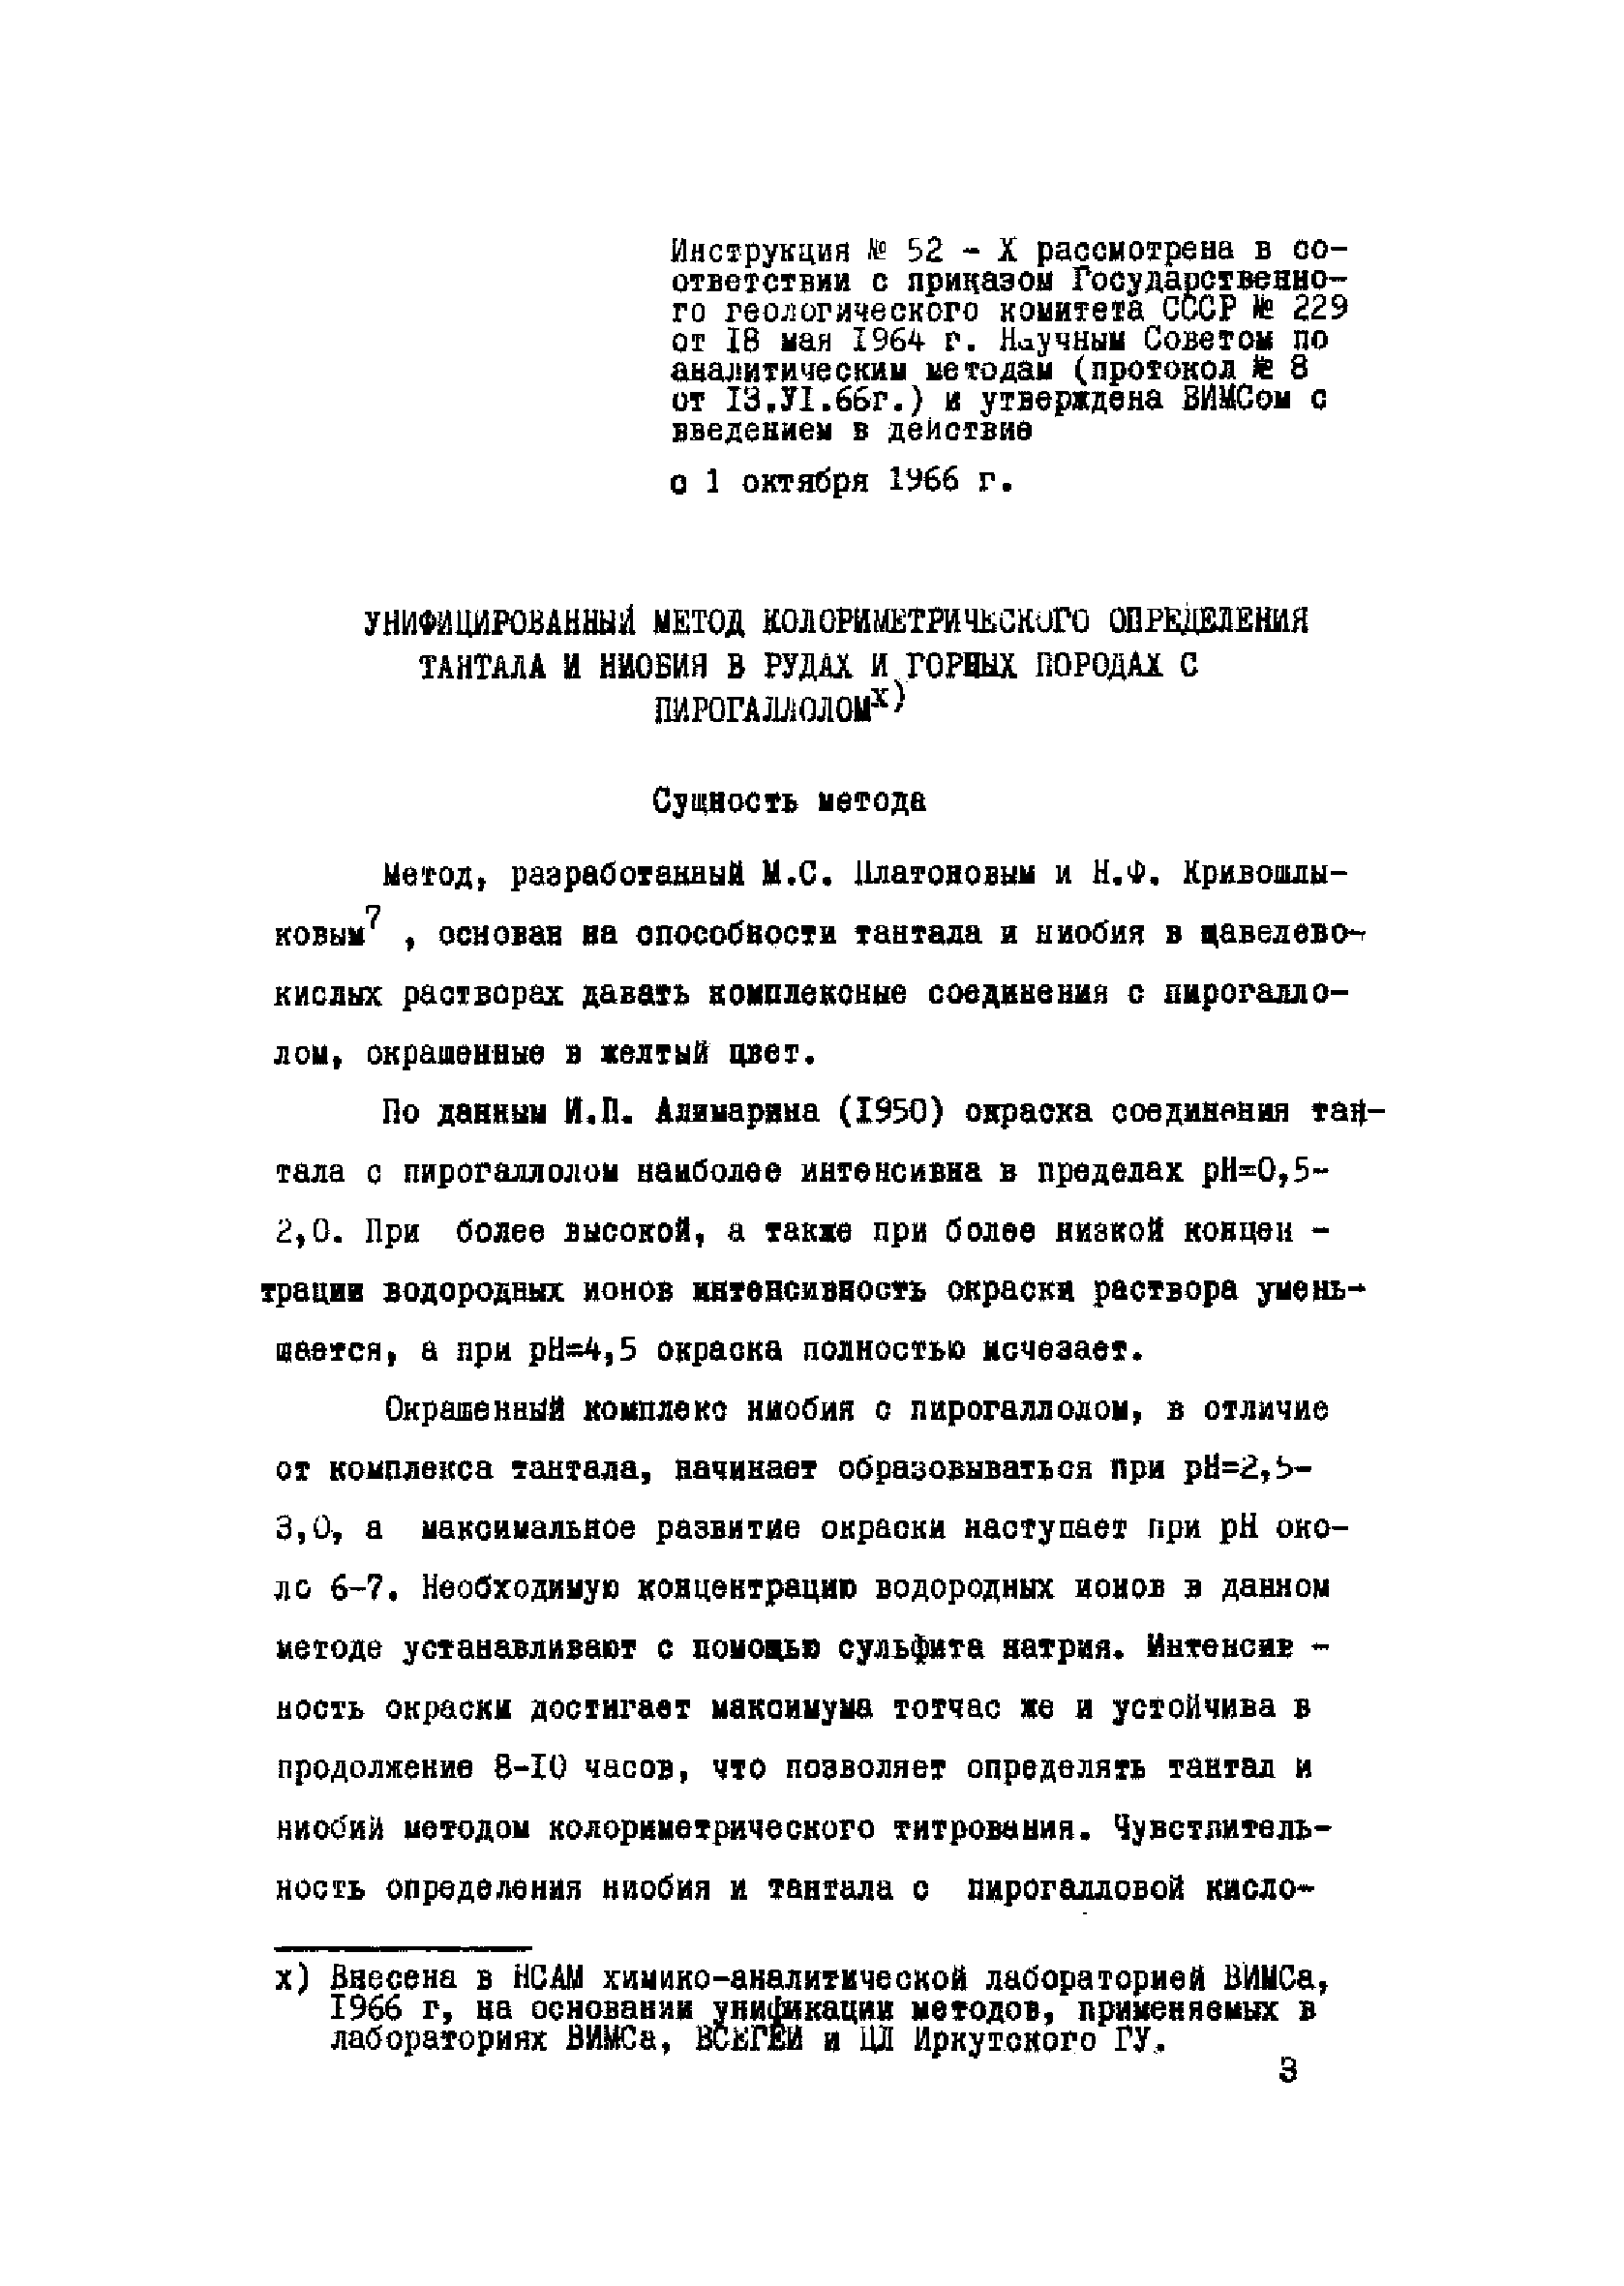 Инструкция НСАМ 52-Х